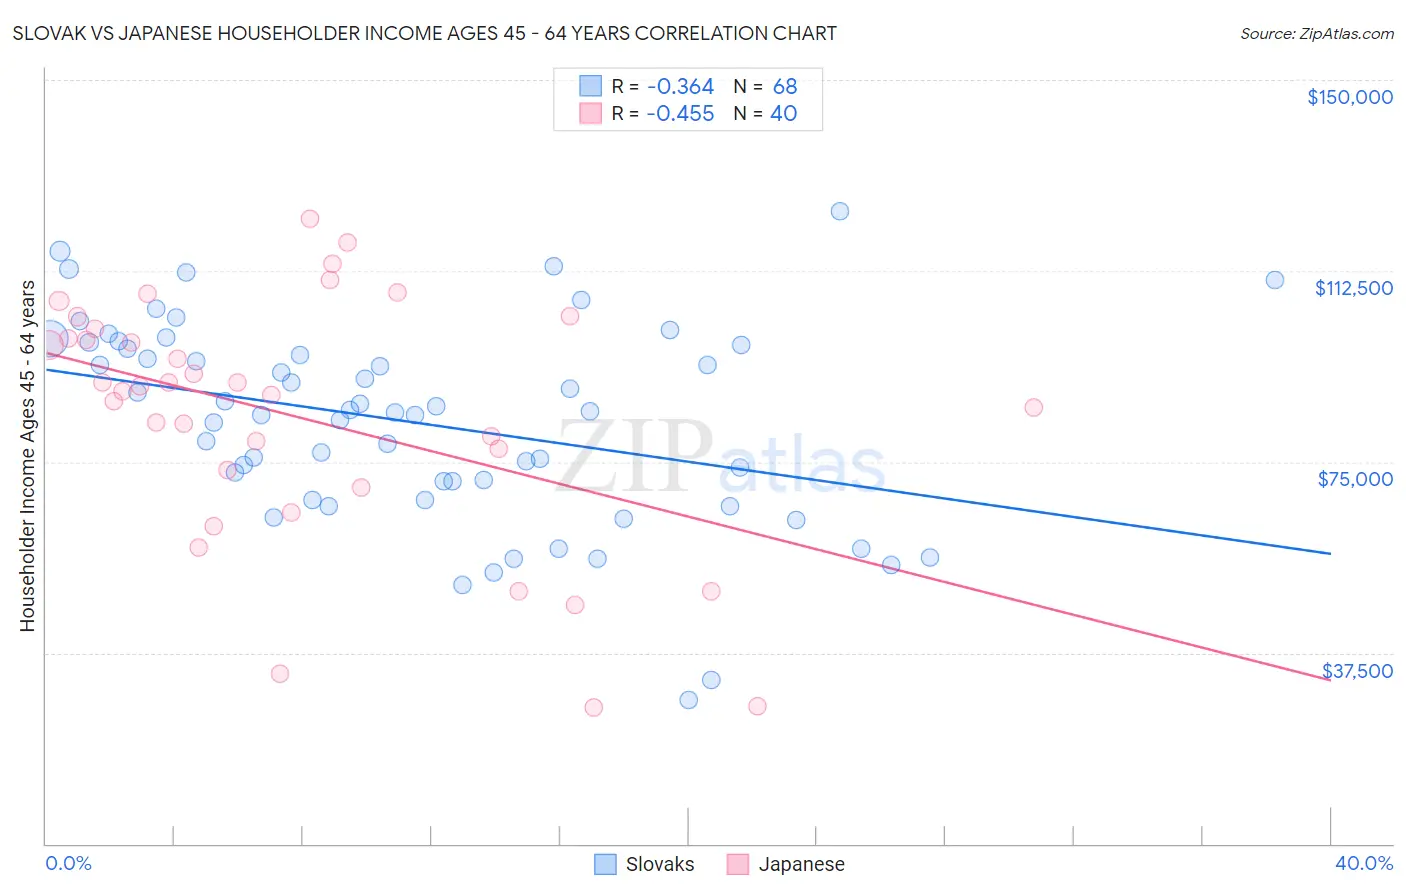 Slovak vs Japanese Householder Income Ages 45 - 64 years